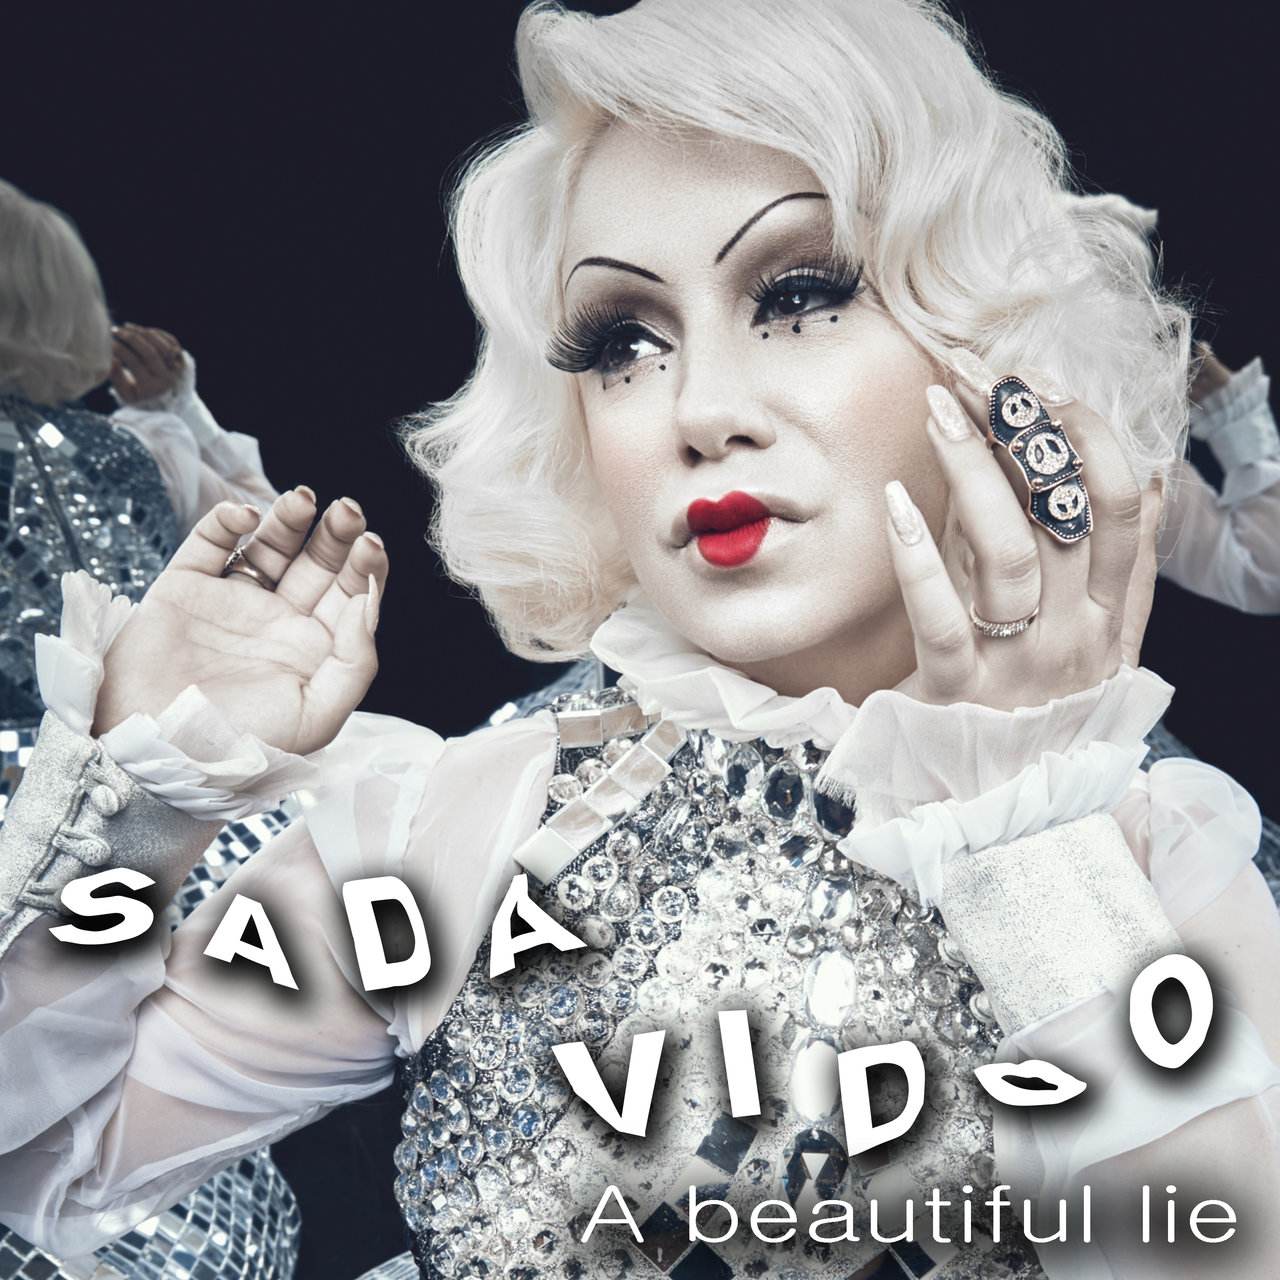 Sada Vidoo — House of Cards cover artwork